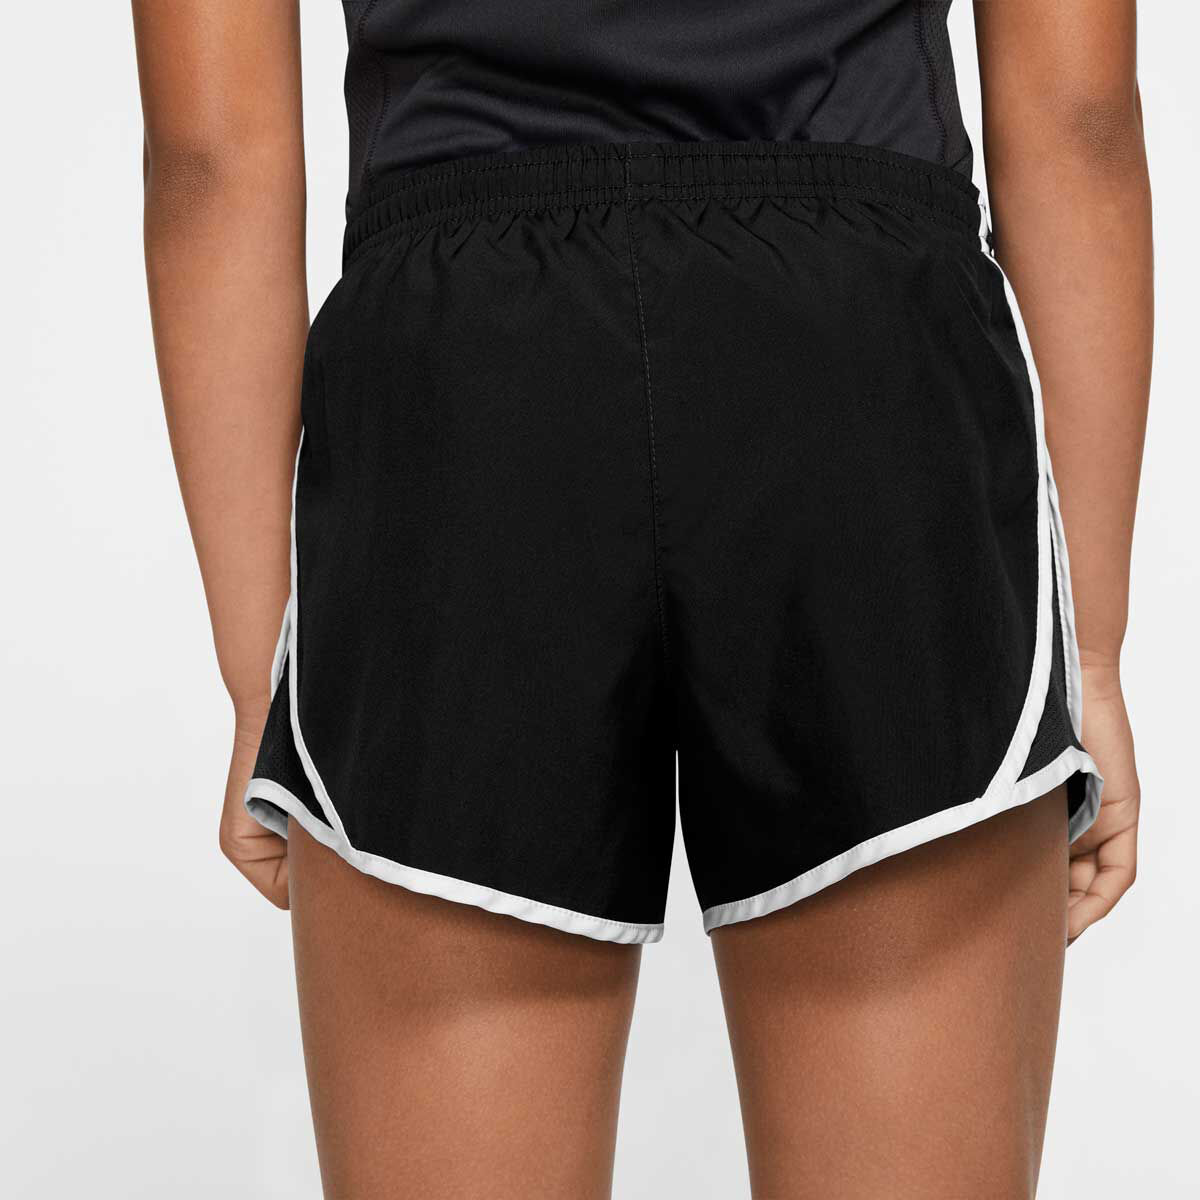 Summer Women Sport Shorts Loose Quick Dry Running Shorts Girls Gym Workout  Dance Yoga Shorts Pocket Training Bottom Beach Shorts